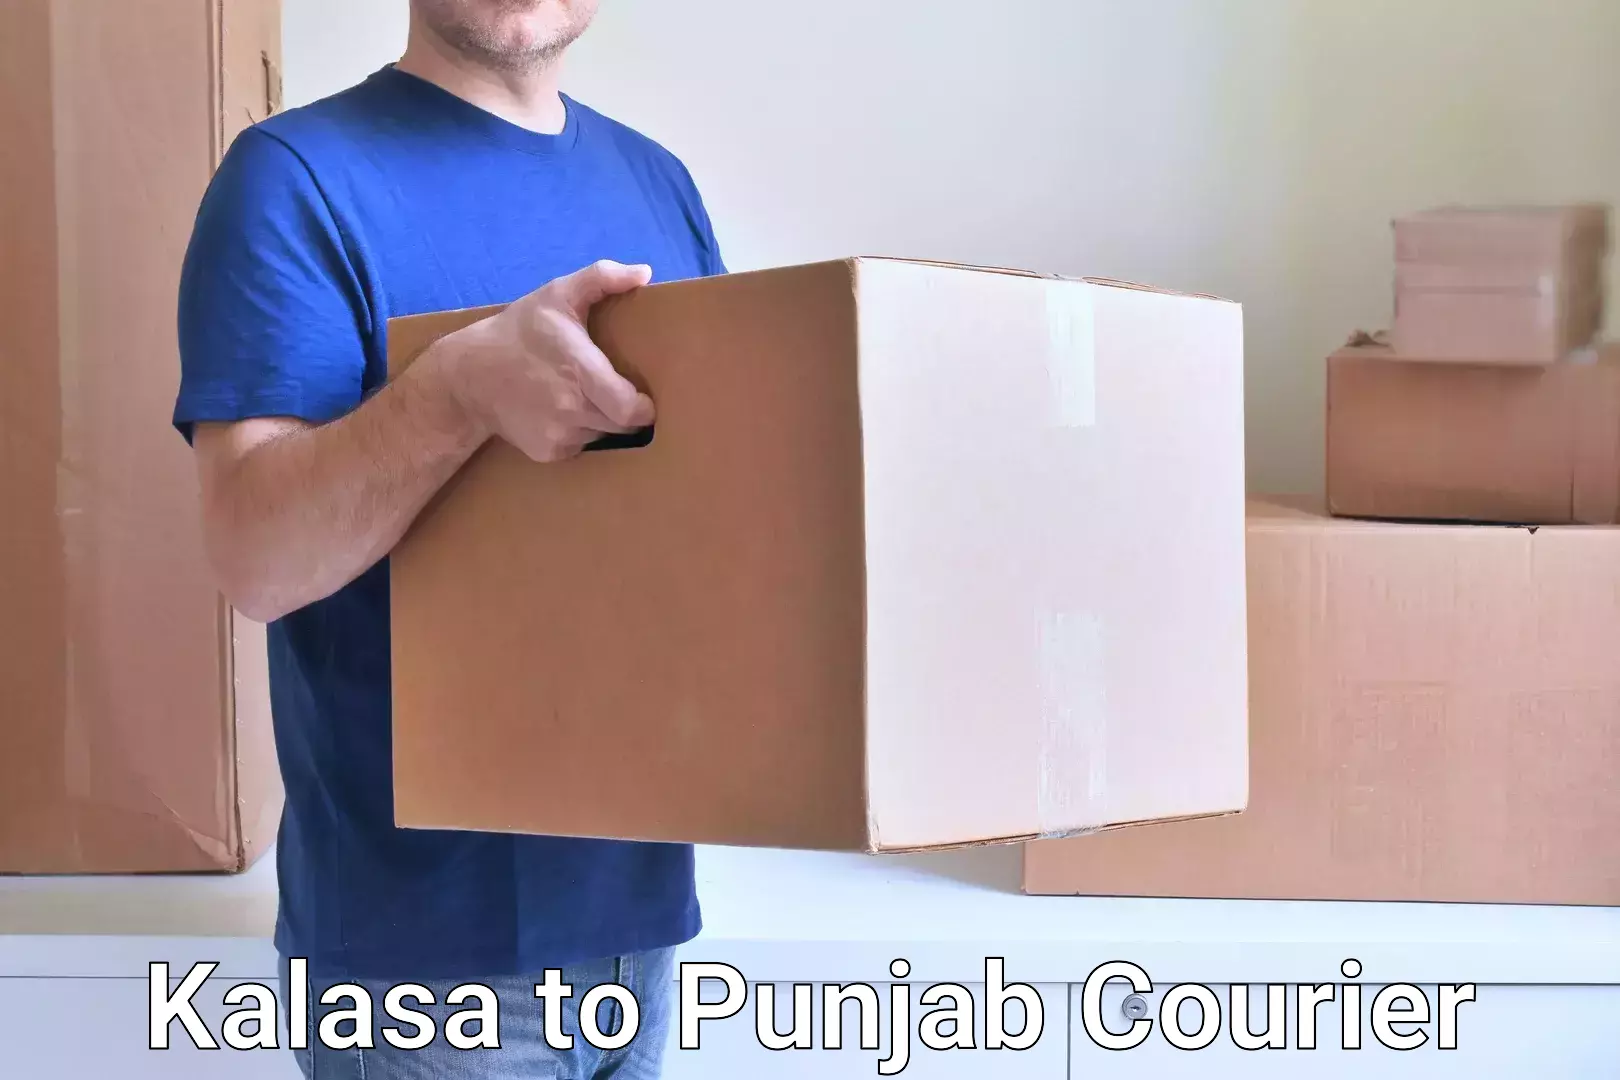 Modern courier technology Kalasa to Punjab